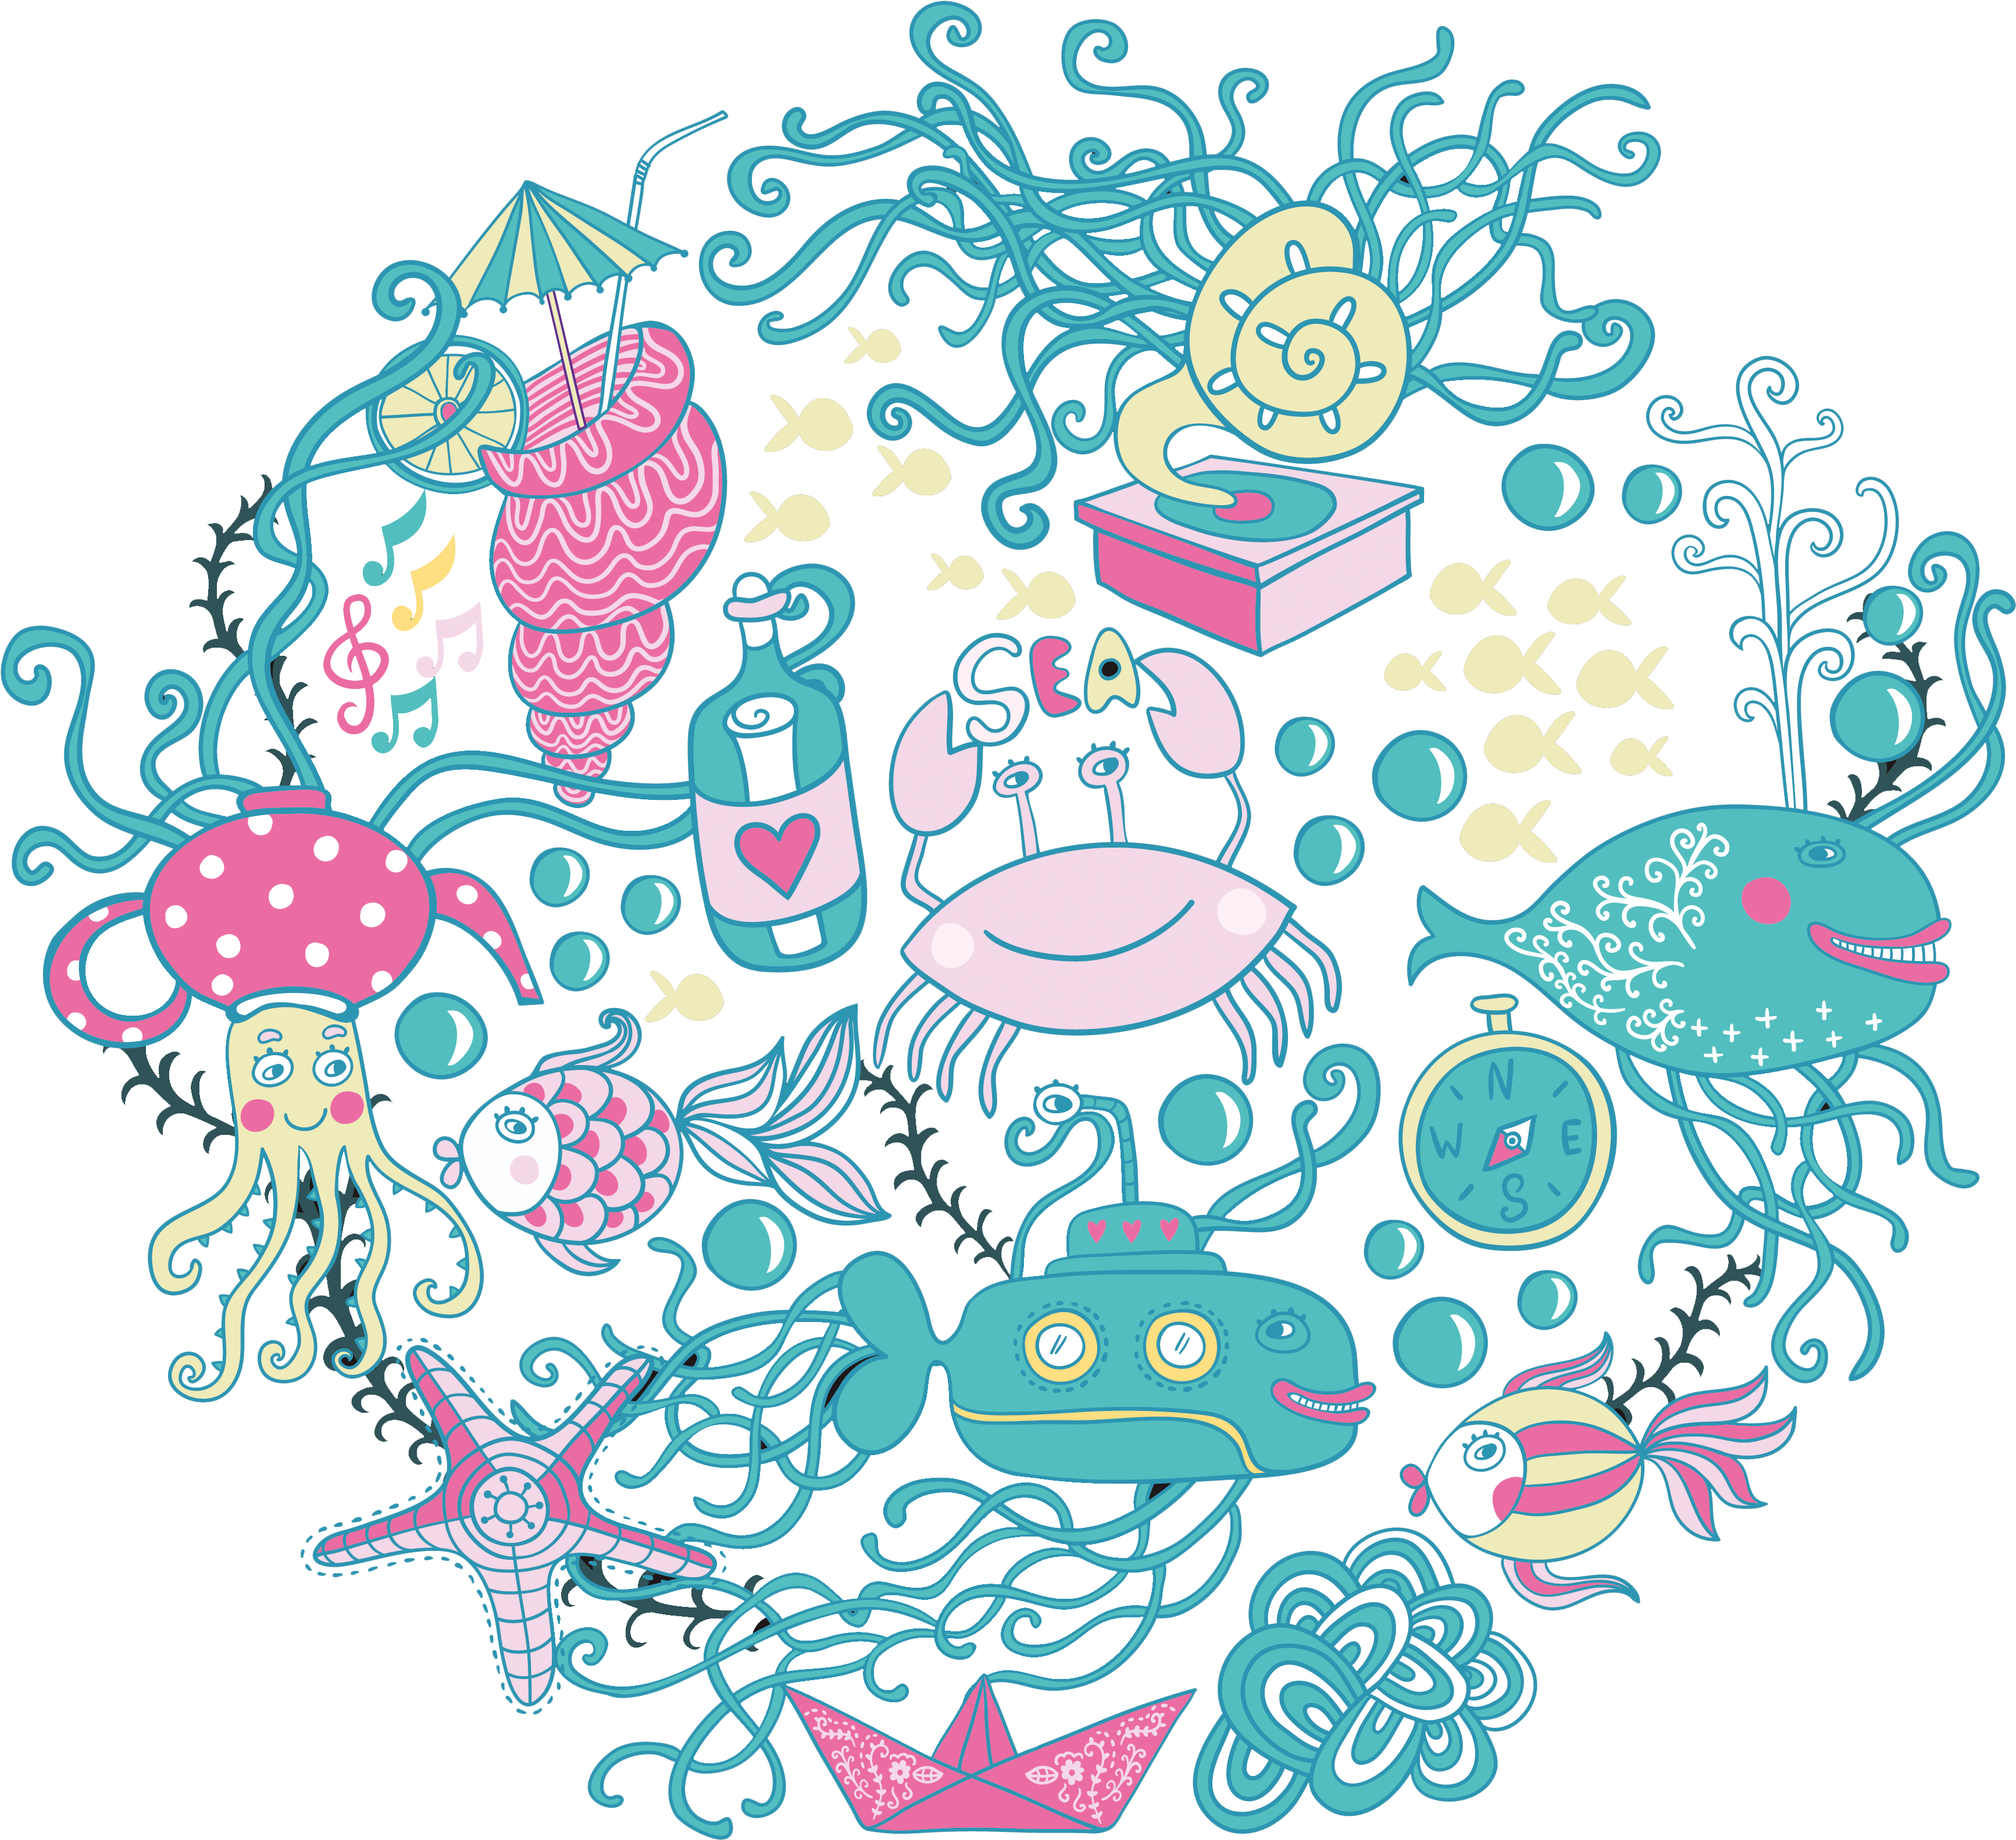 Jellyfish Marine Biology Drawing - Marine Biology (4200x4200)